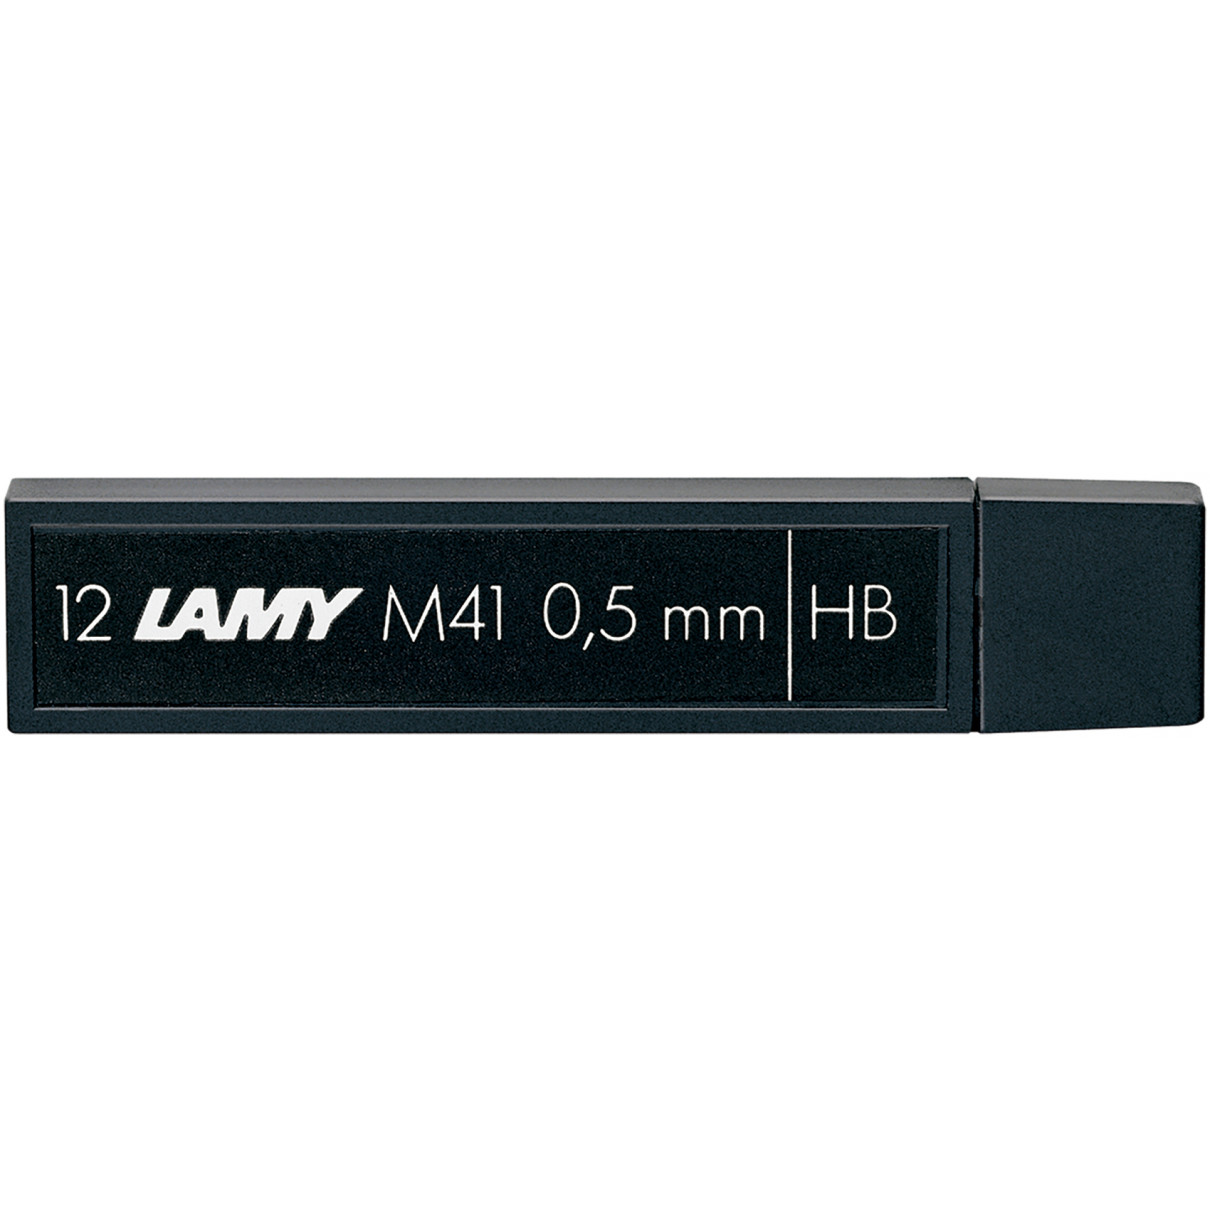 Lamy M41 Pencil Leads - HB - 0.5mm